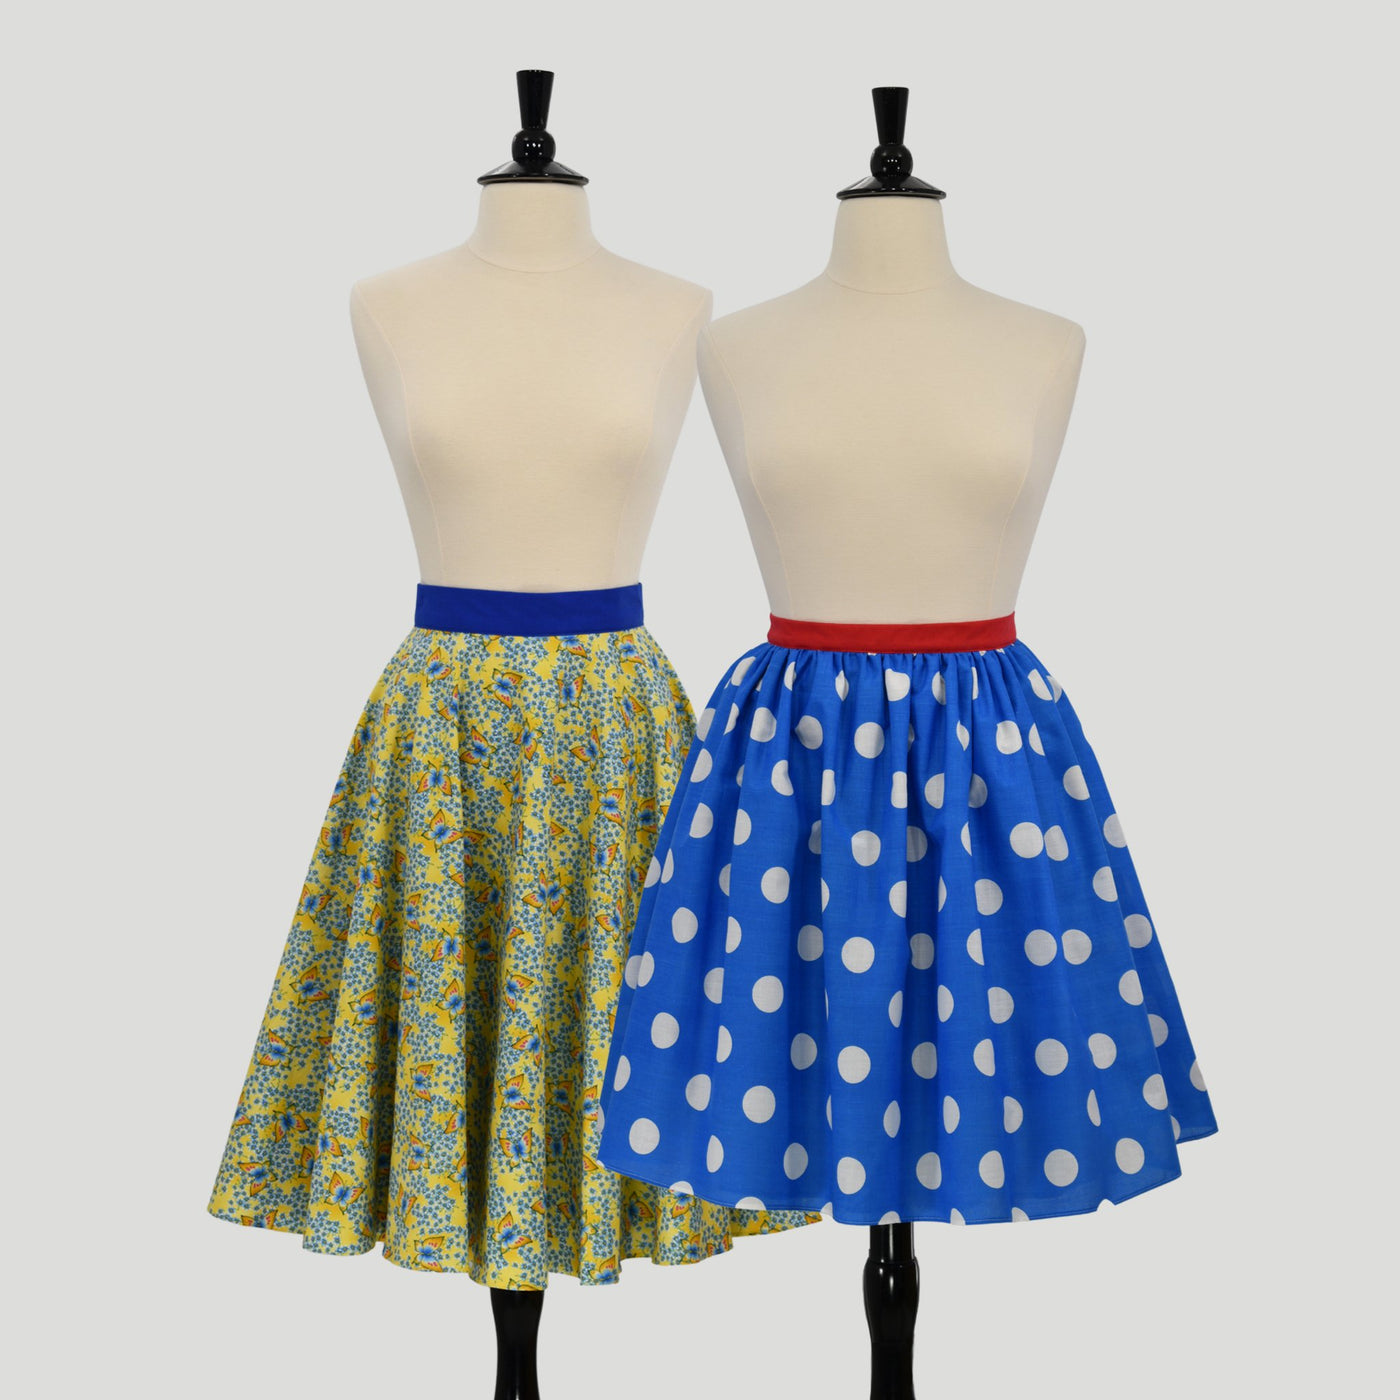 Hyssop circle skirt pinup skirt midi skirt PricklyPoppy gathered skirt on dress forms